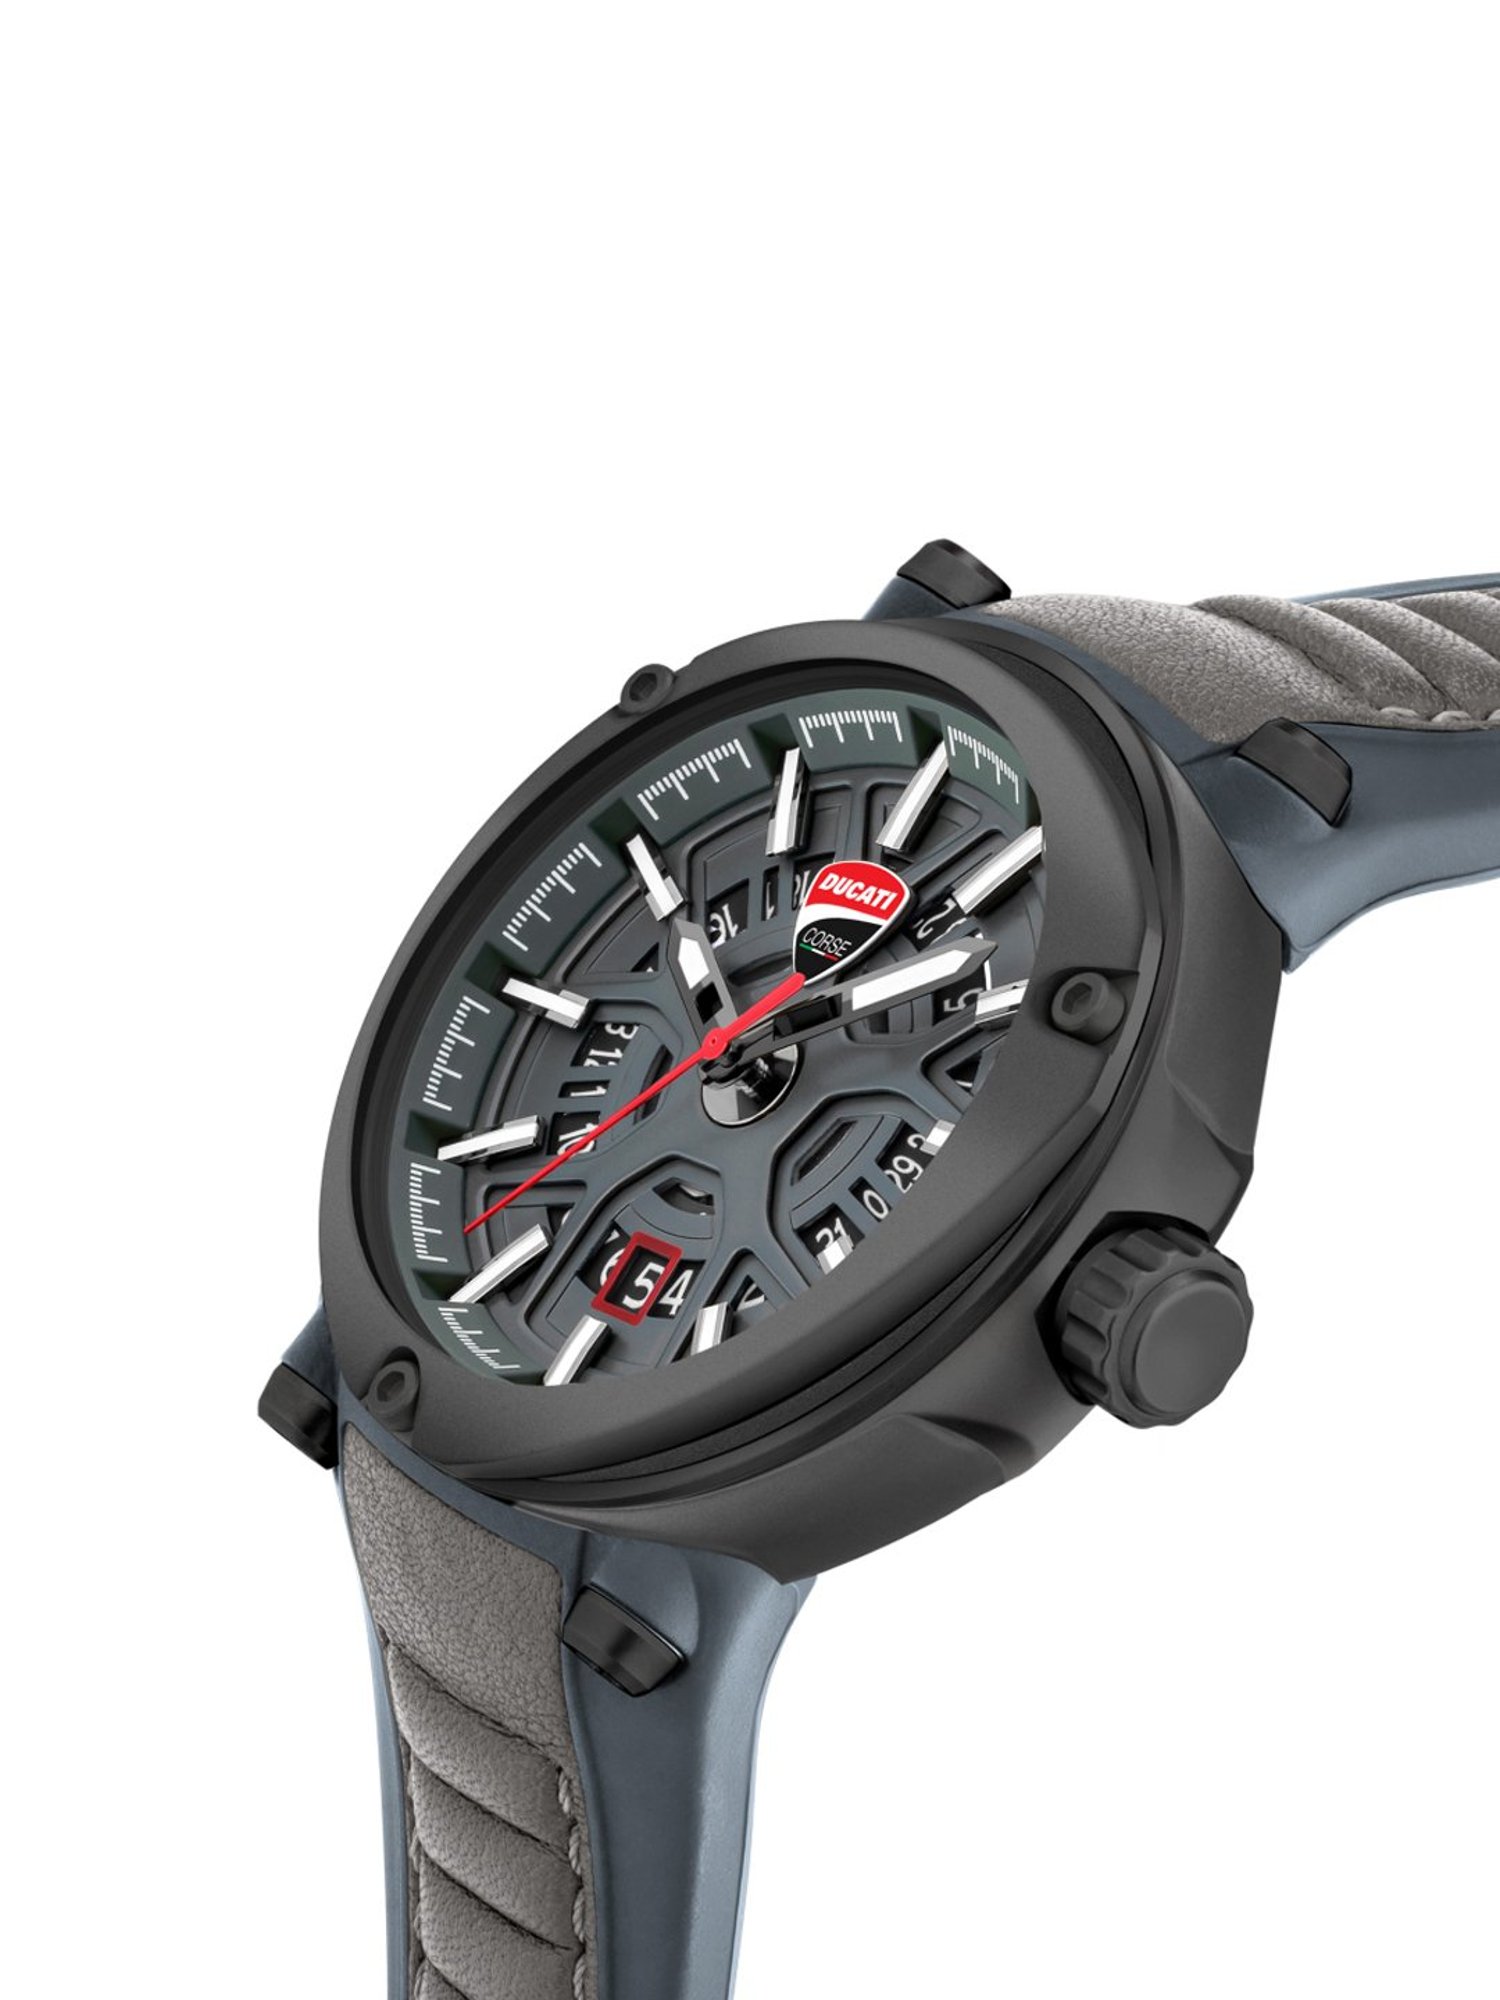 Locman Ducati D550K09S-BKCBRDSK | Ref. D550K09S-BKCBRDSK Watches on Chrono24